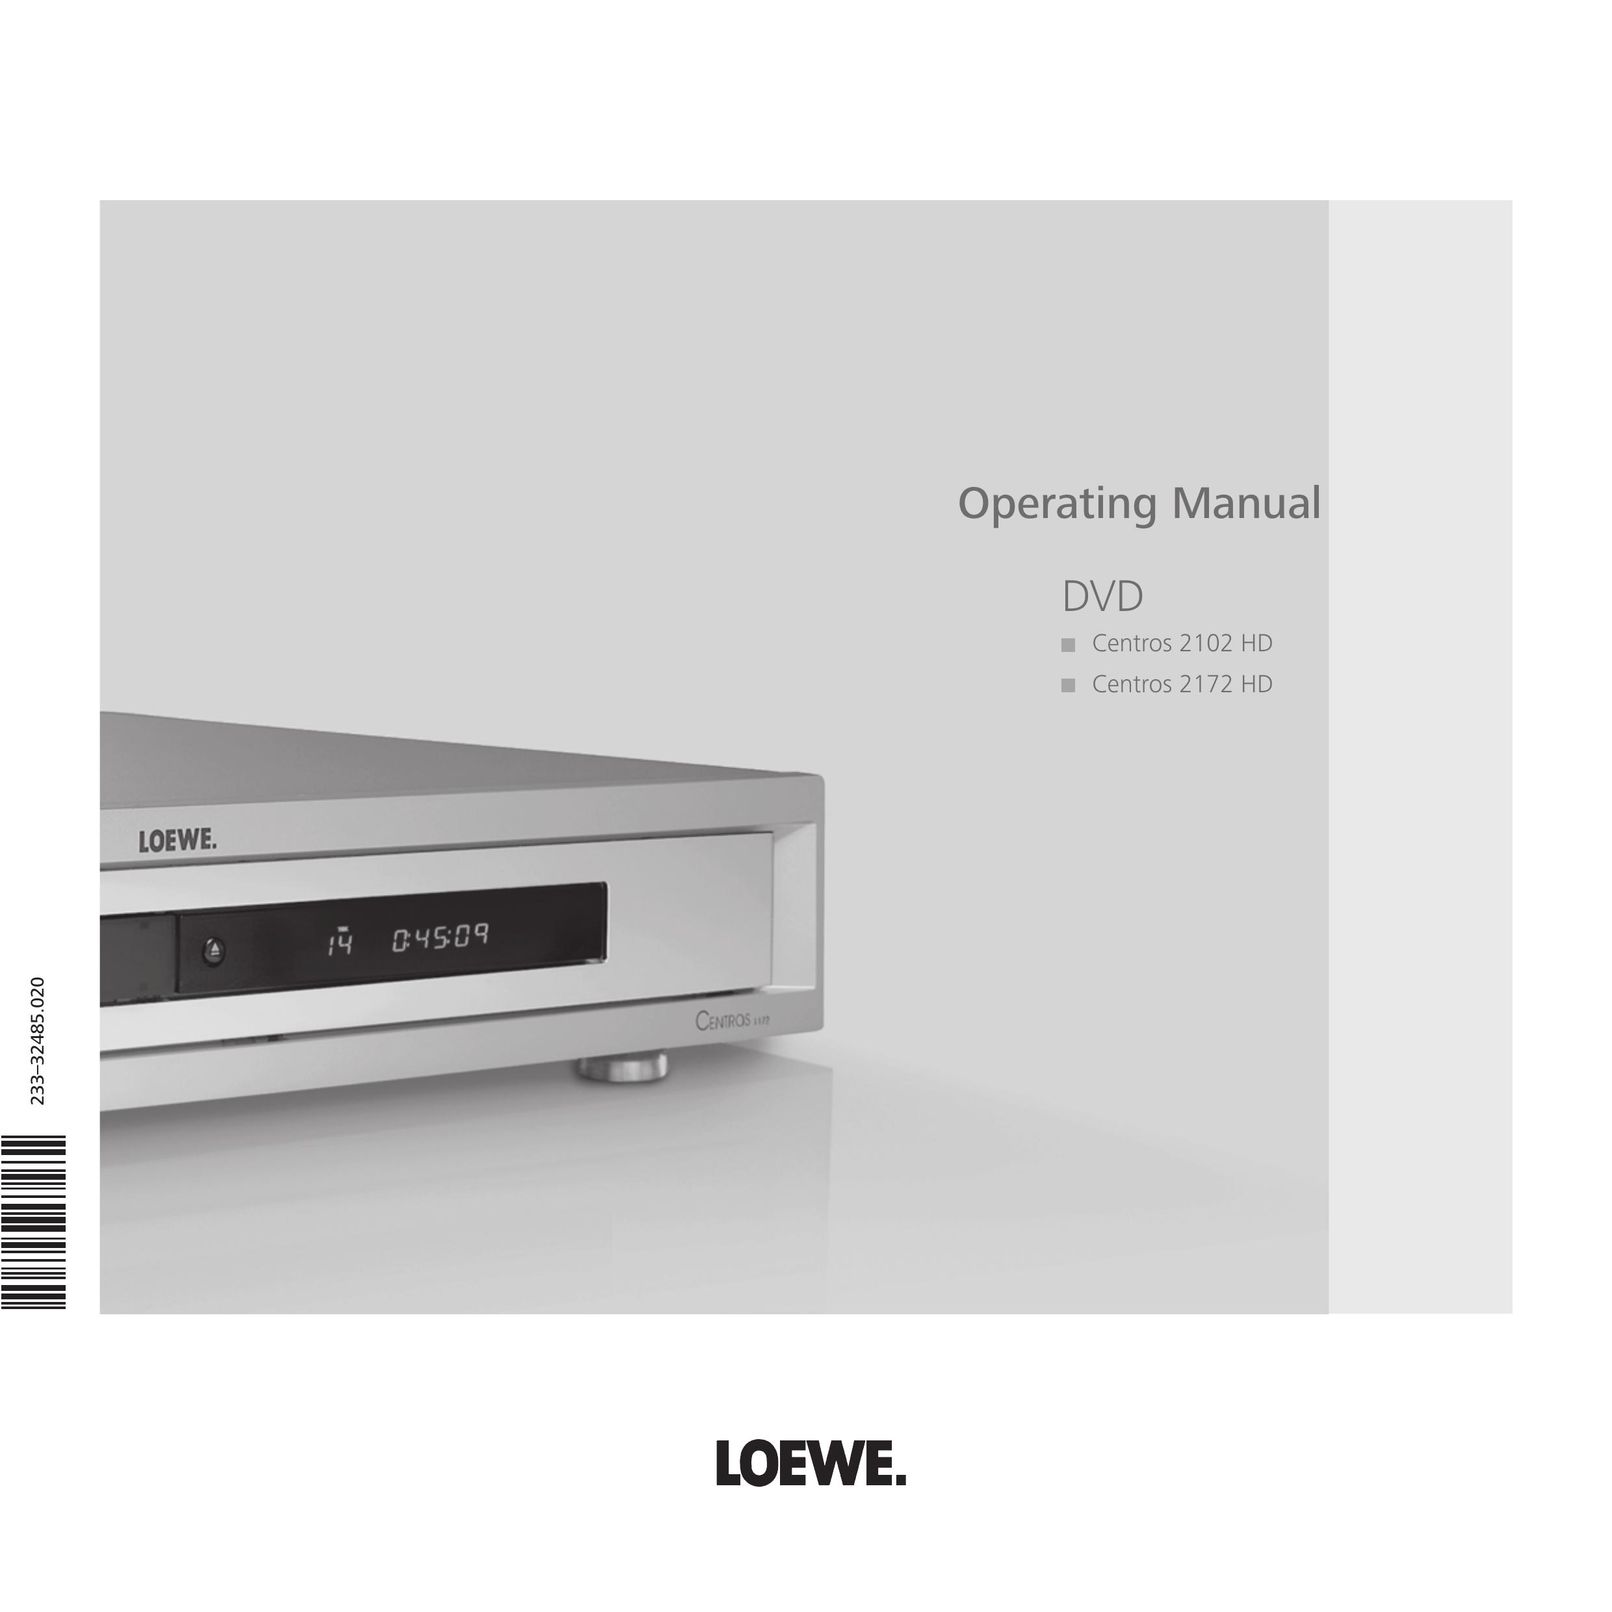 Loewe Centros 2172 HD DVD Player User Manual